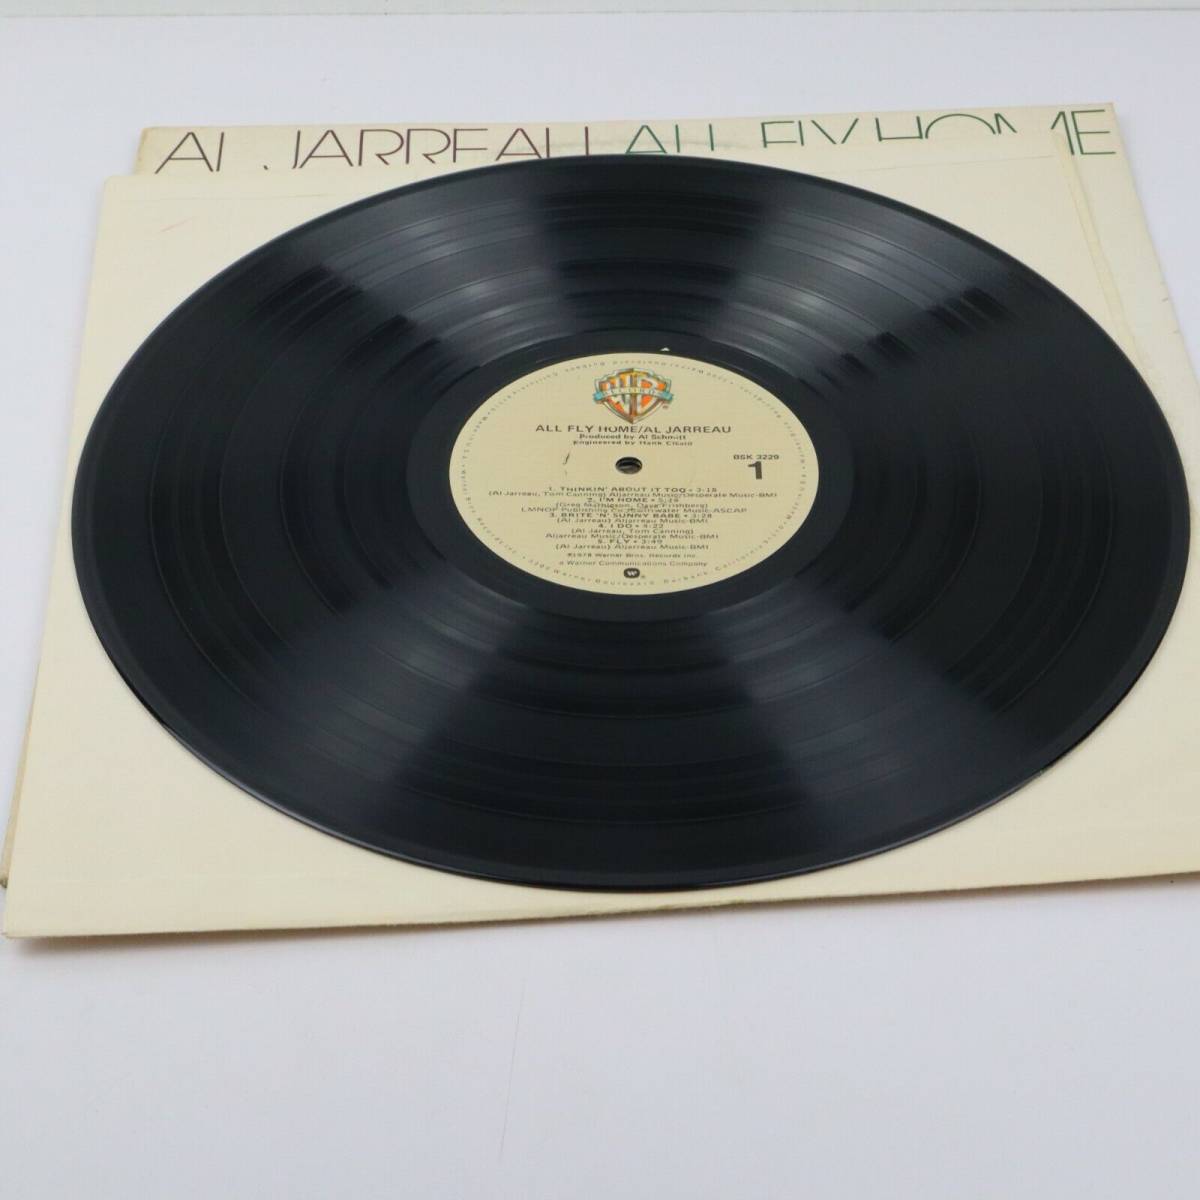 Al Jarreau All Fly Home 12" LP BSK 3229 Warner Bros. Records 1978 海外 即決 4